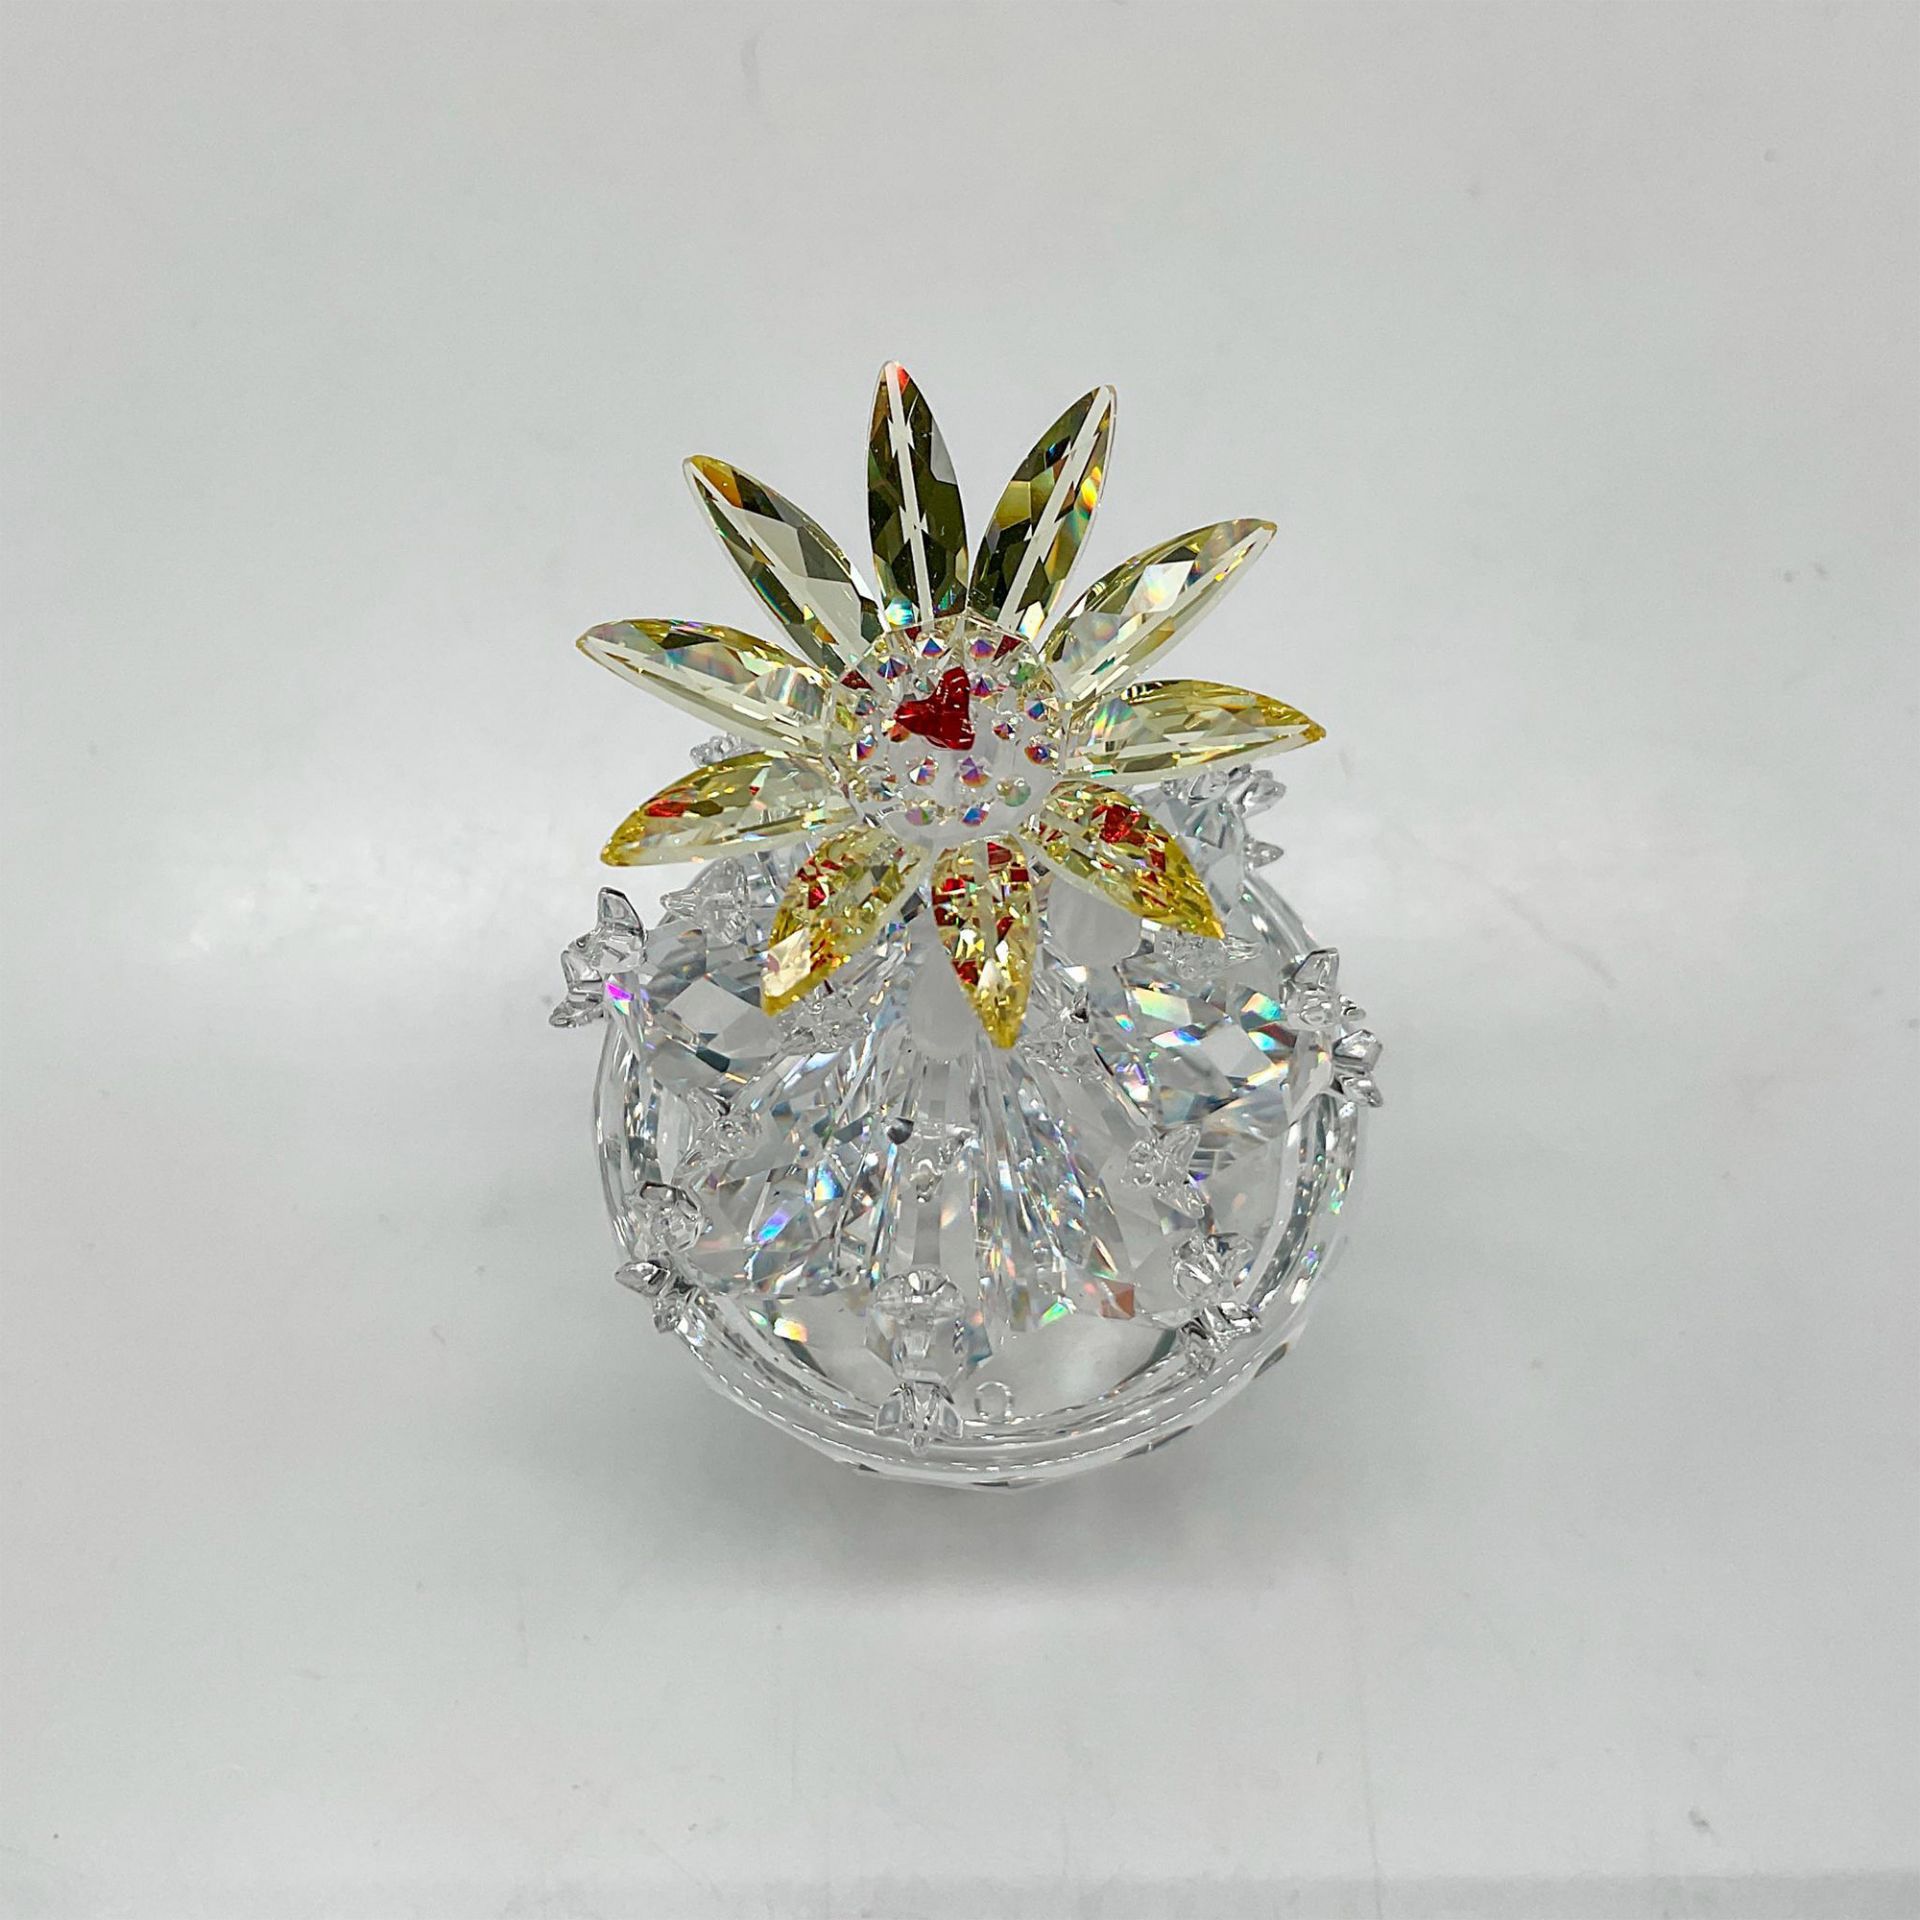 Swarovski Crystal Figurine, Flowering Cactus - Image 2 of 4